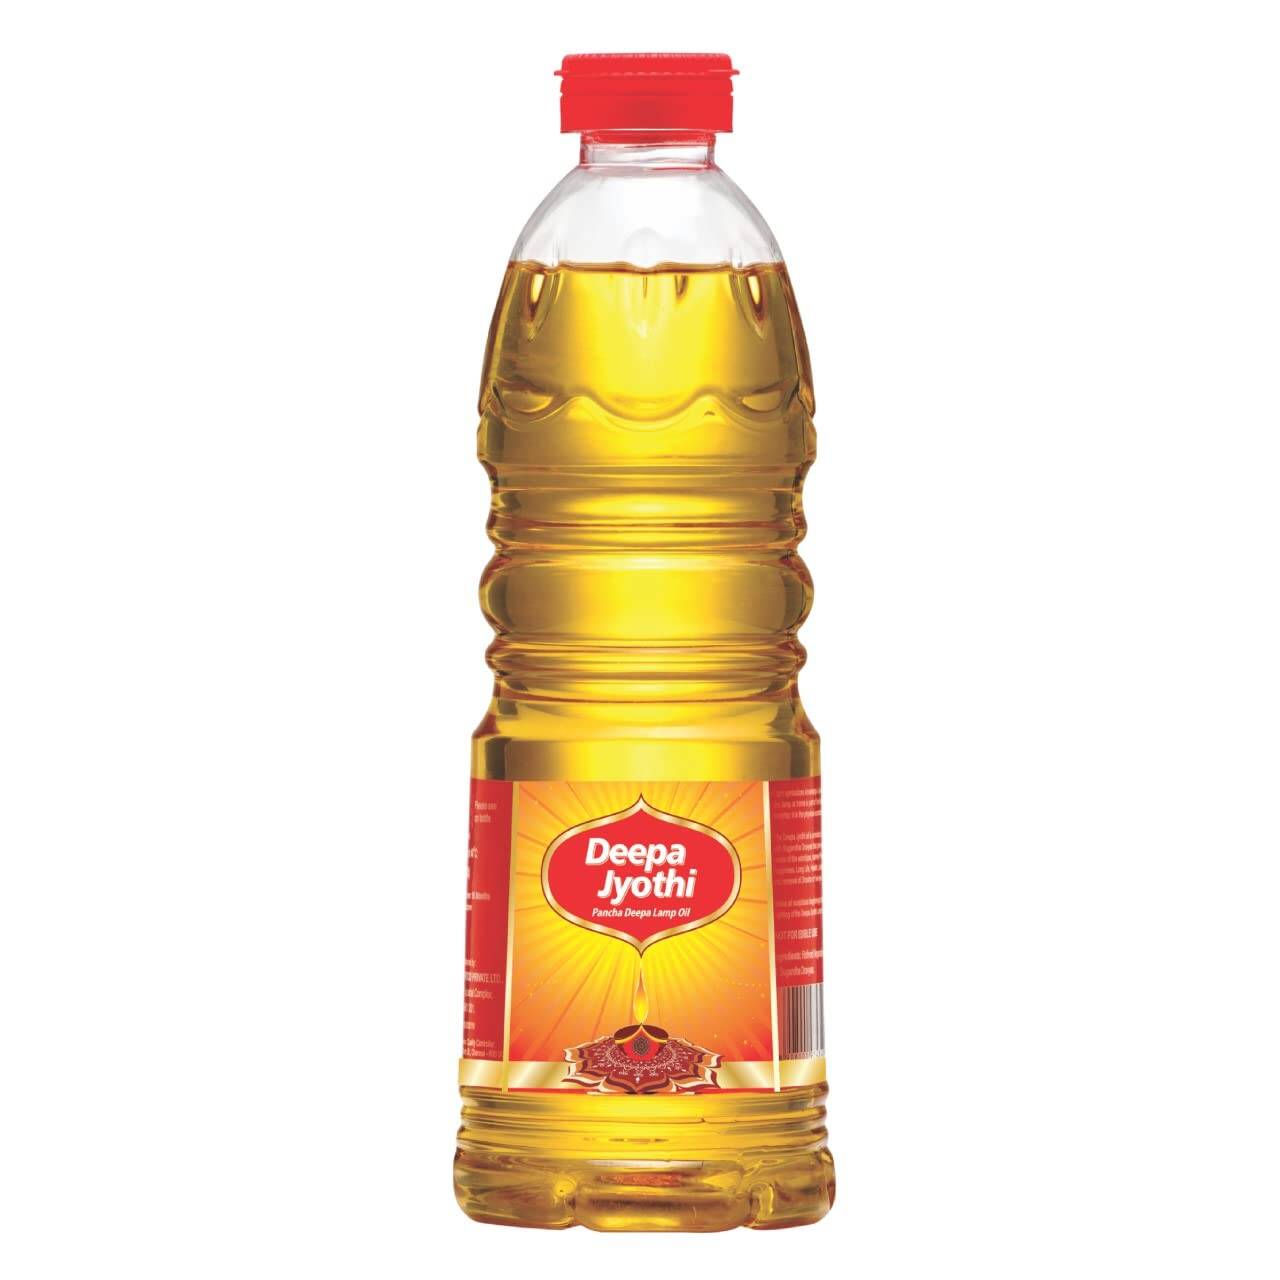 Pancha Deepa Lamp Oil (Pooja Oil) 500ml - Best Indian Grocery Store ...